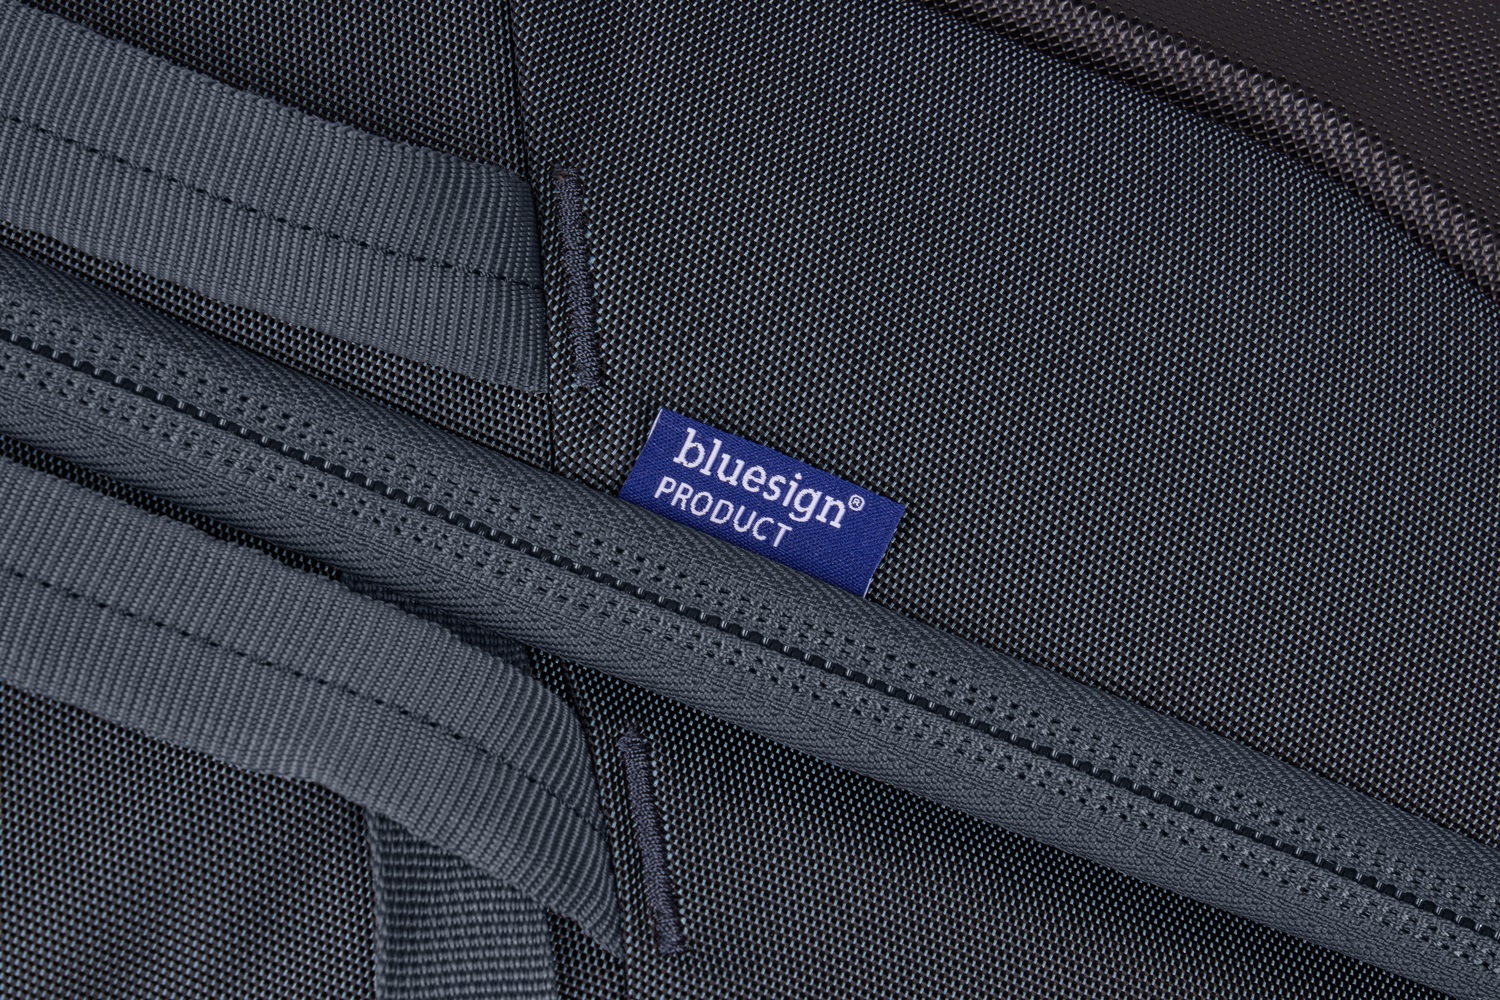 Thule Subterra 2 putna torba s kotačima 70cm/90L za unos prtljage u zrakoplov - plava